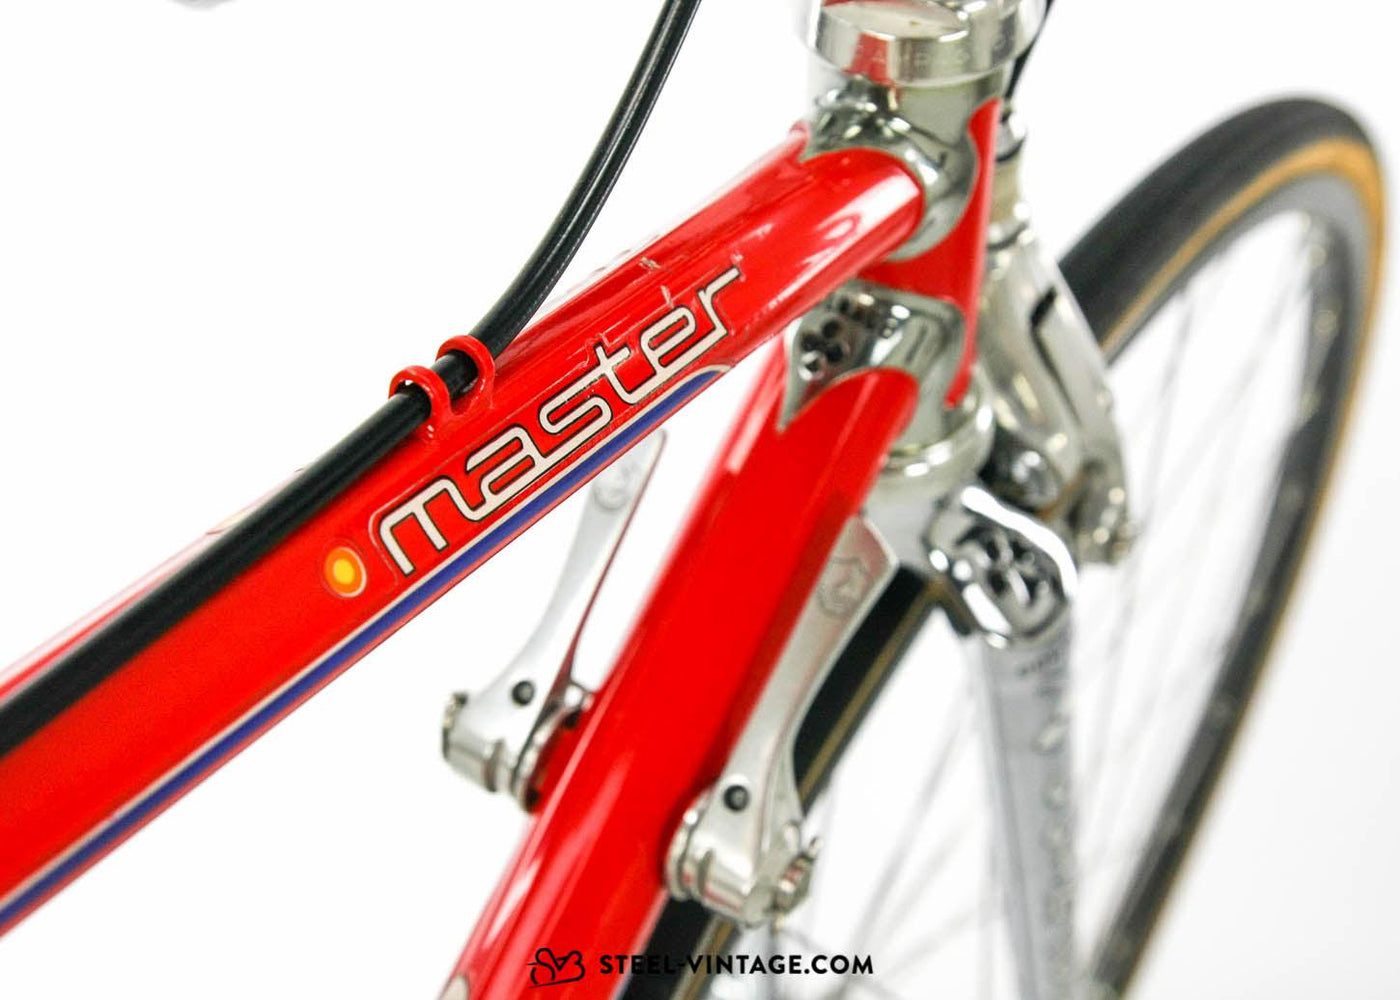 Colnago Master Classic Racing Bike 1987 - Steel Vintage Bikes